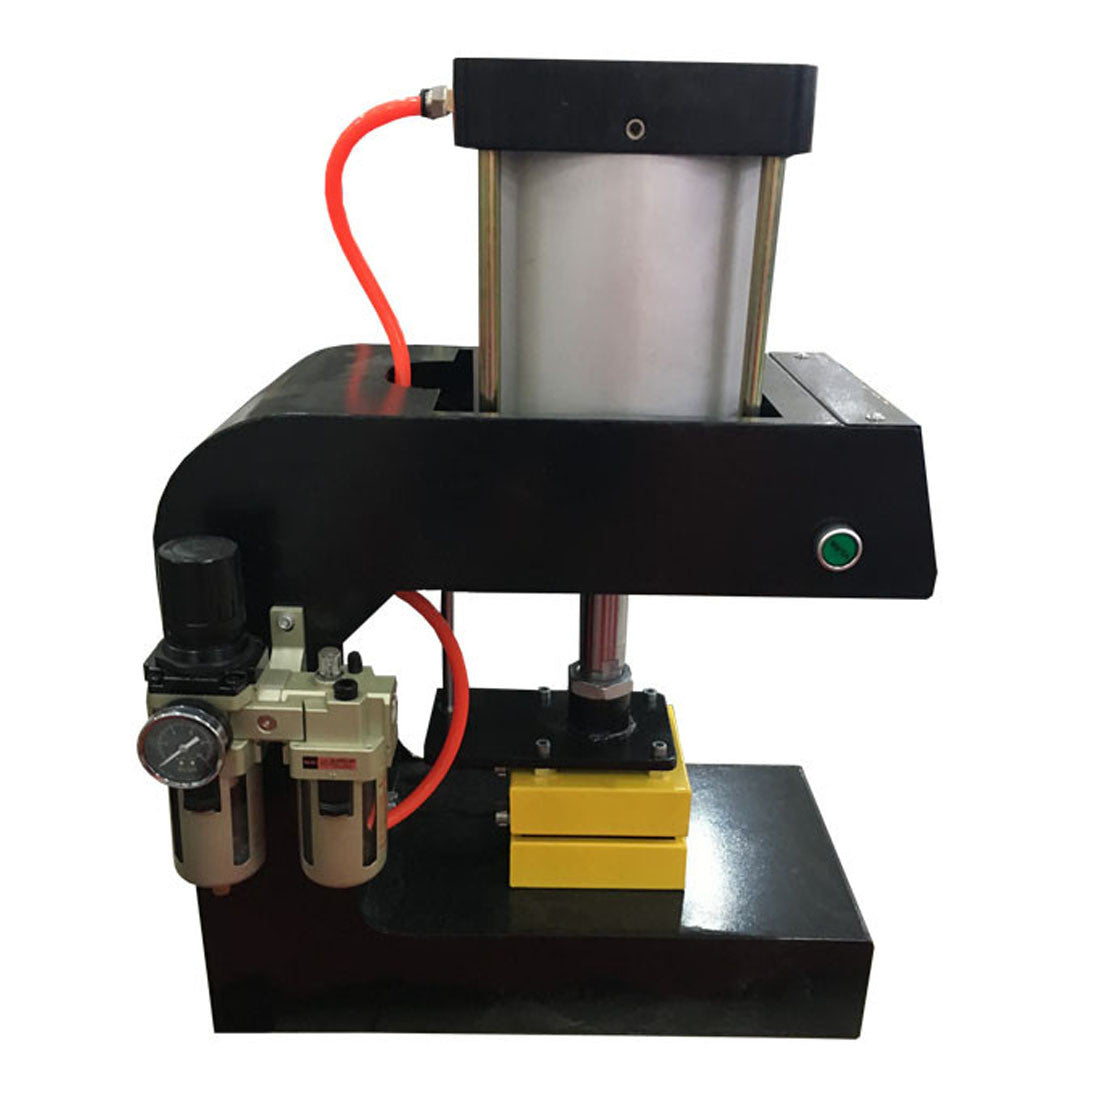 Pneumatic rosin press with air compressor